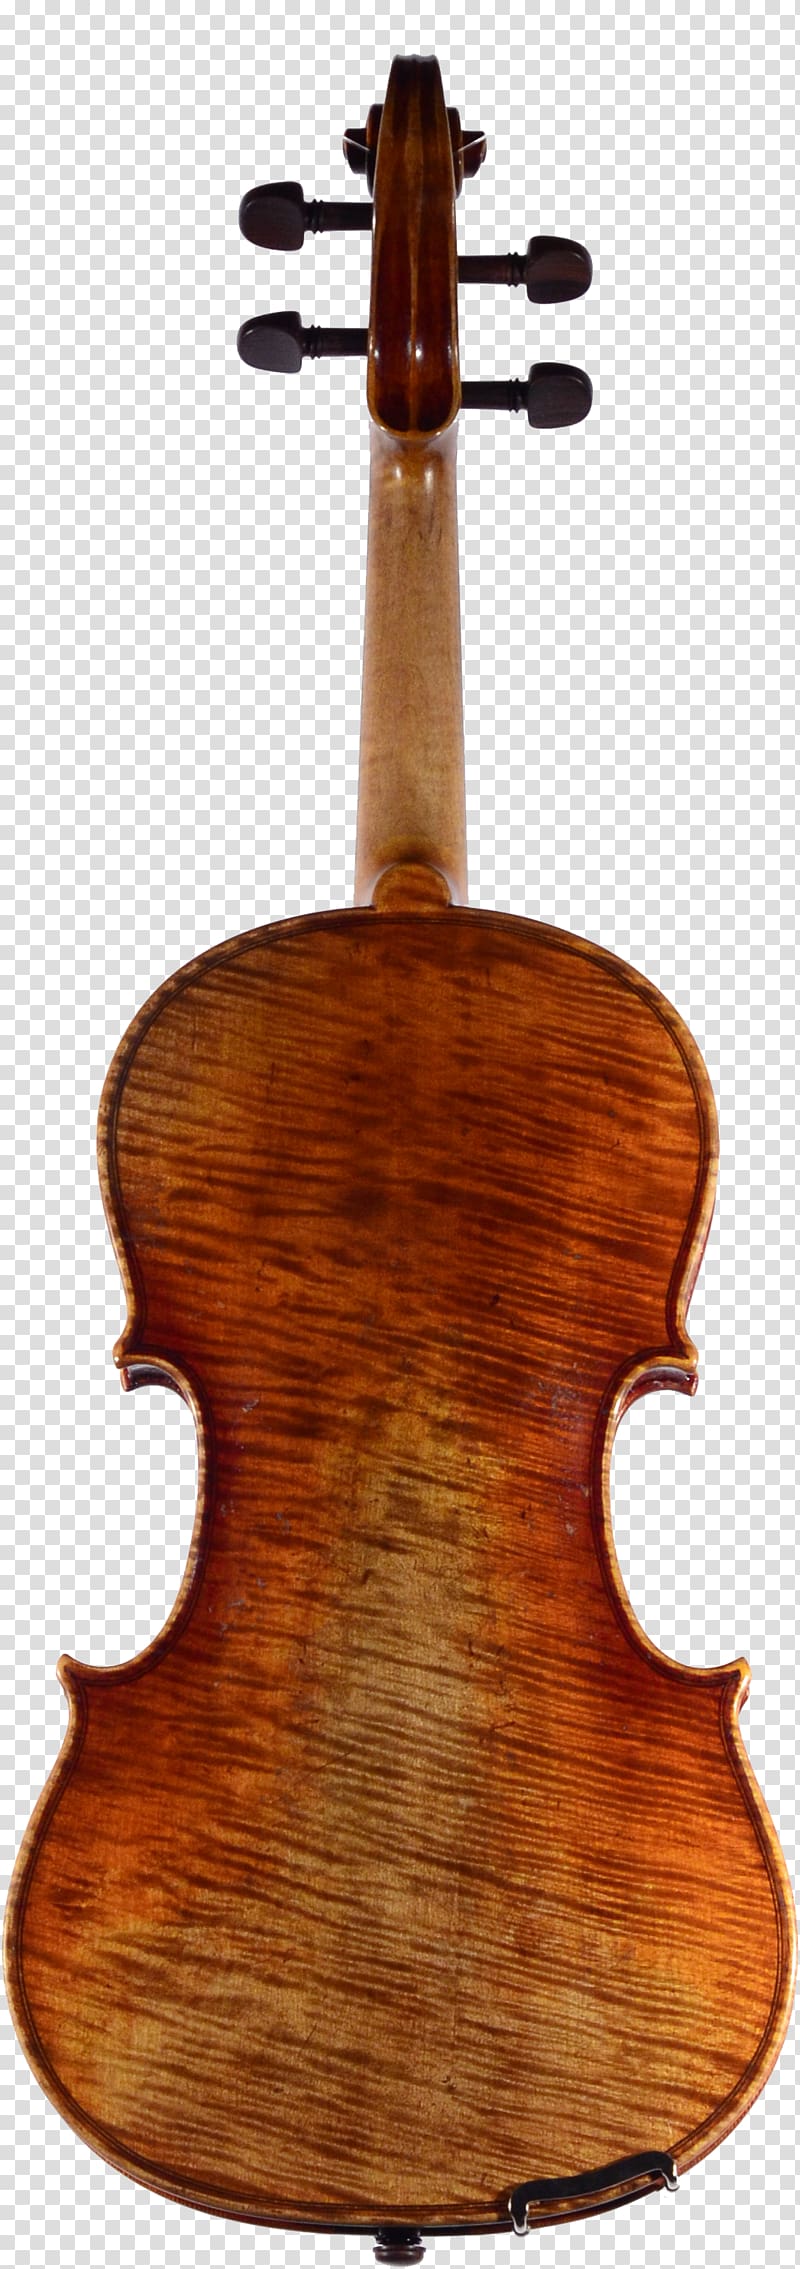 Violin Stradivarius Luthier Musical Instruments Musician, Five String Violin transparent background PNG clipart